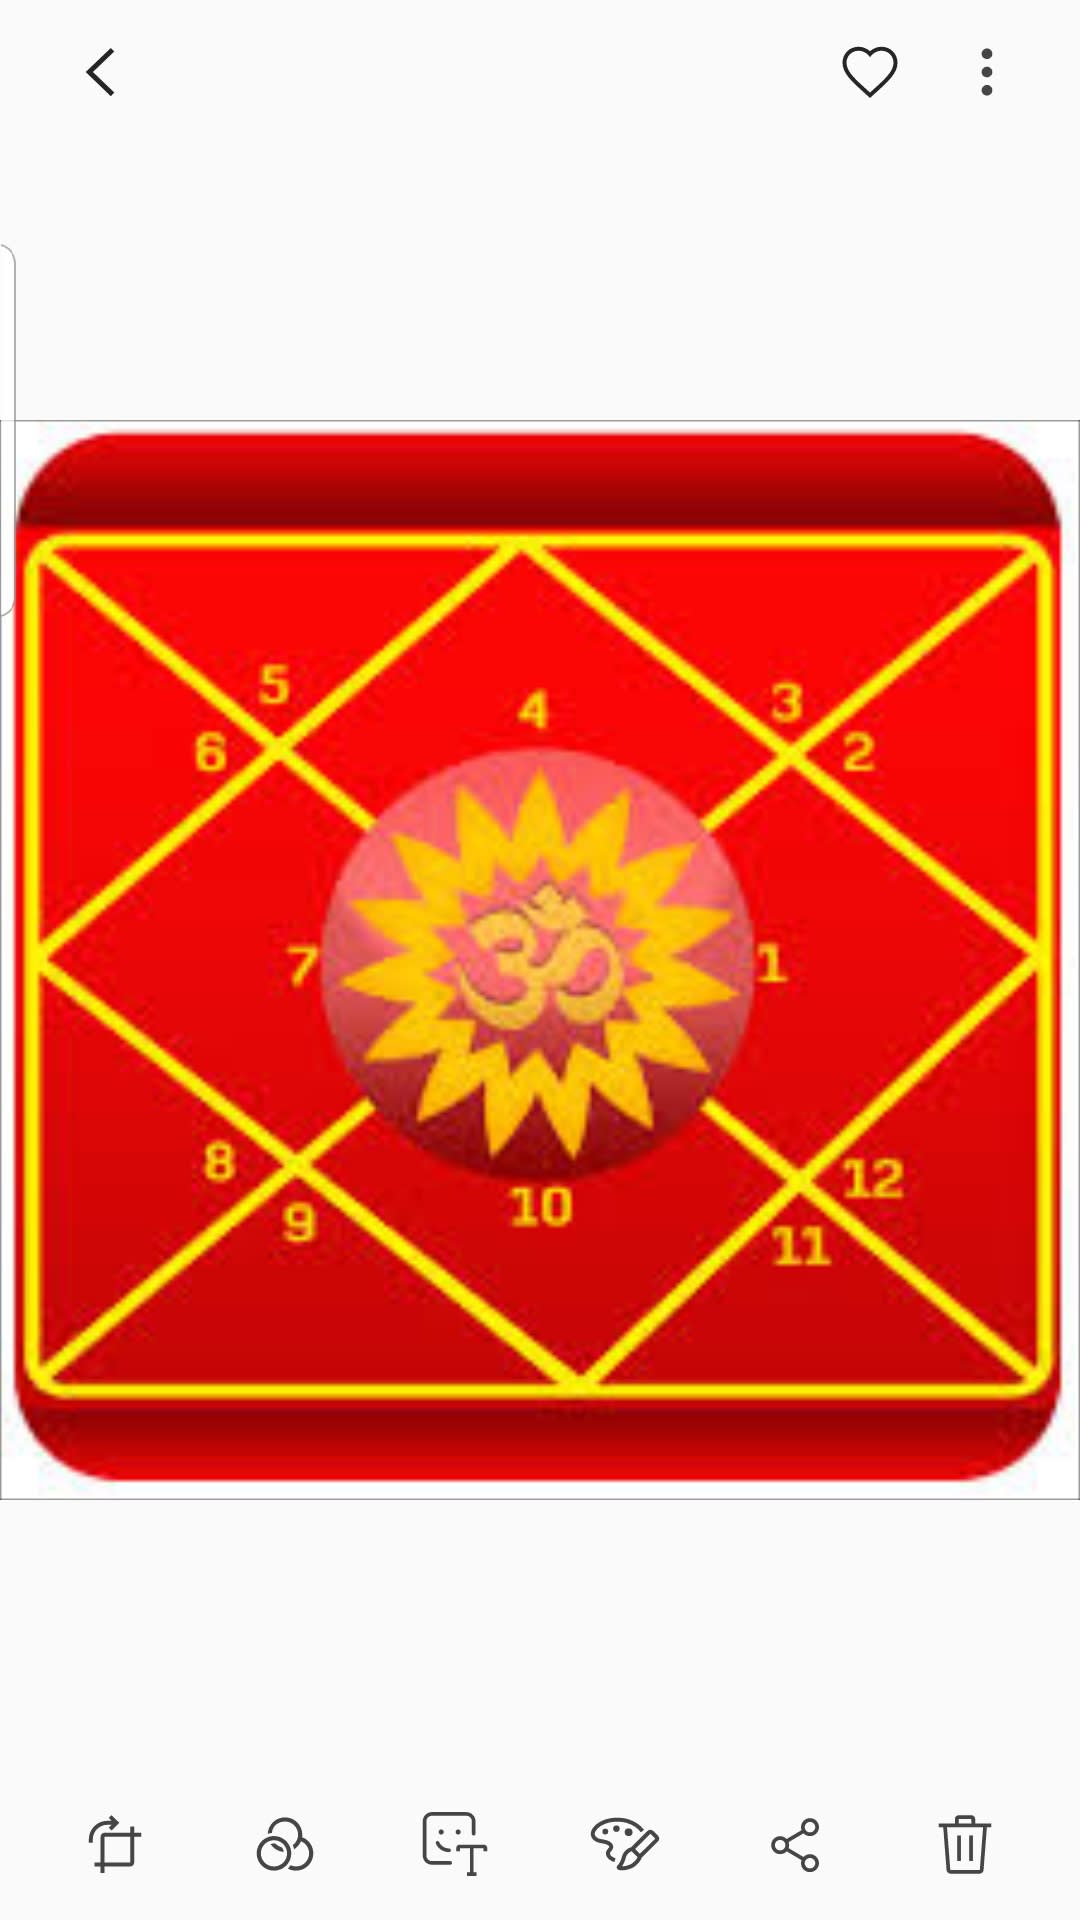 Provide You Kundli Astrology By Deepti1212 Fiverr Kasam tumhe kasam aake milna yahin. provide you kundli astrology by